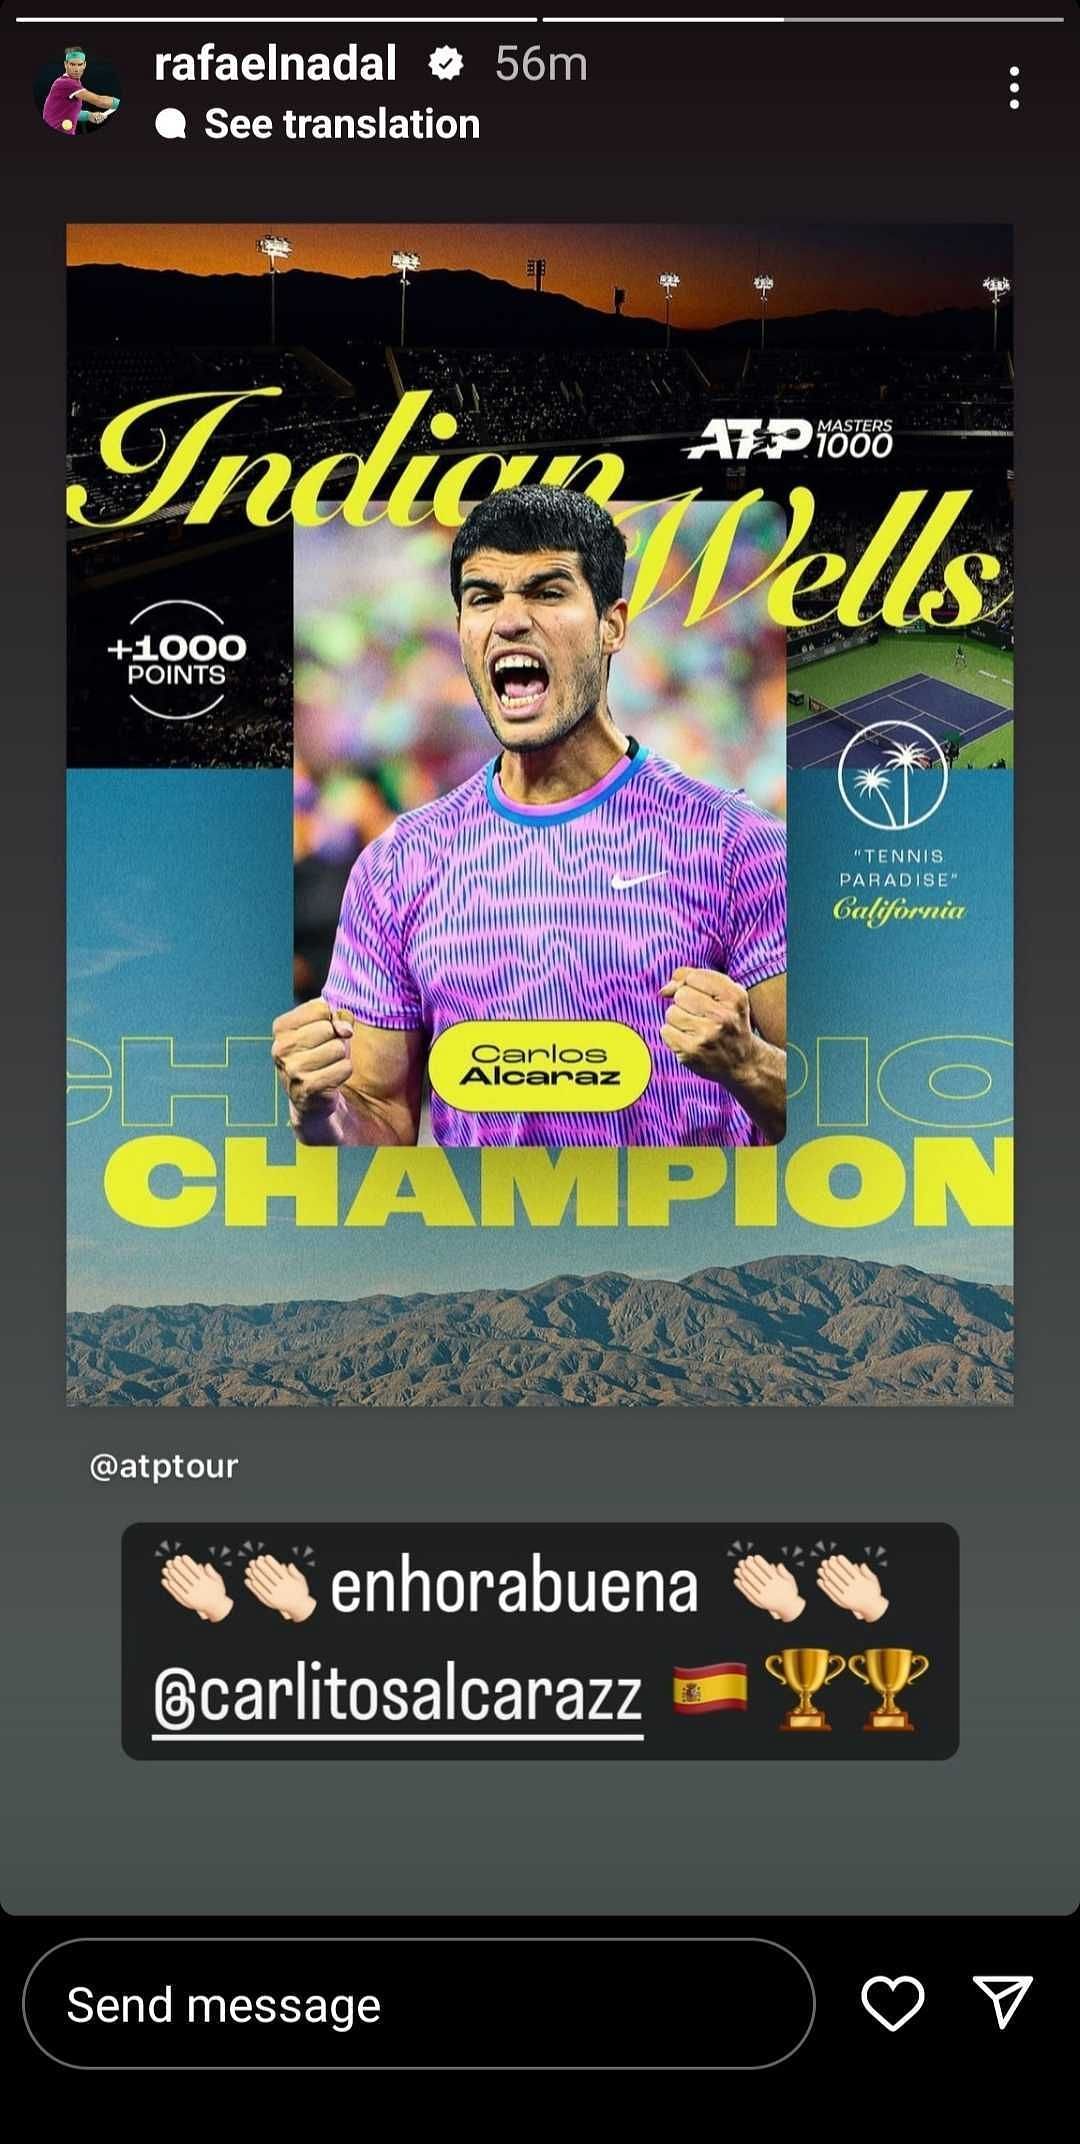 Rafael Nadal on Instagram